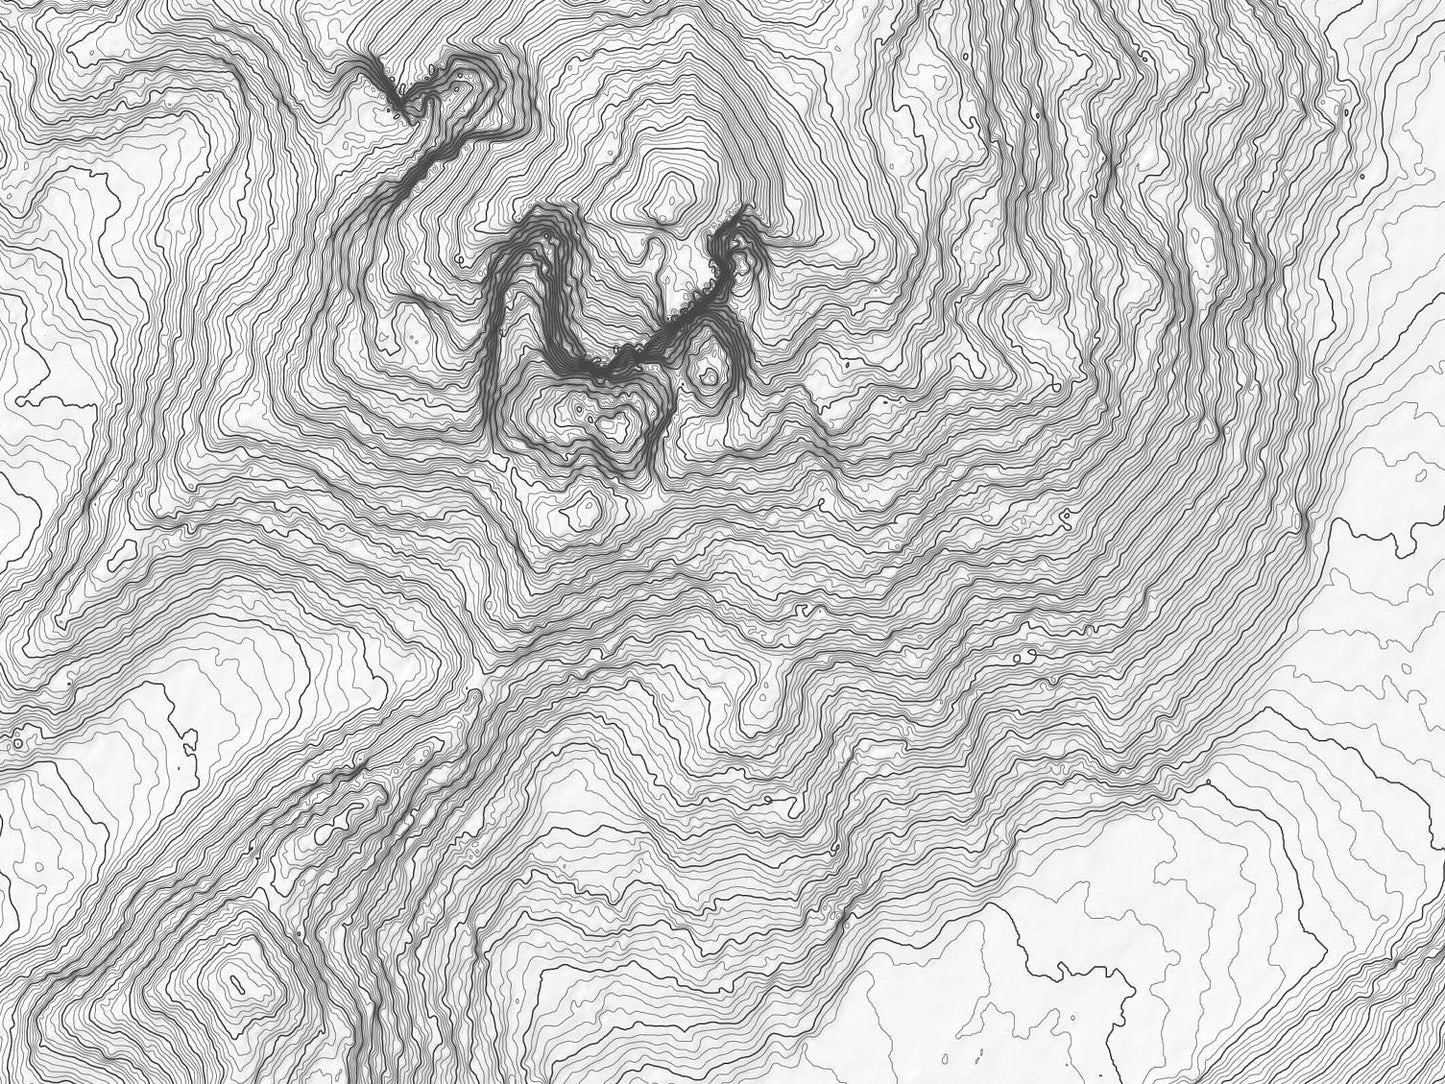 K2, Pakistan China Topography Elevation Print Wall Art